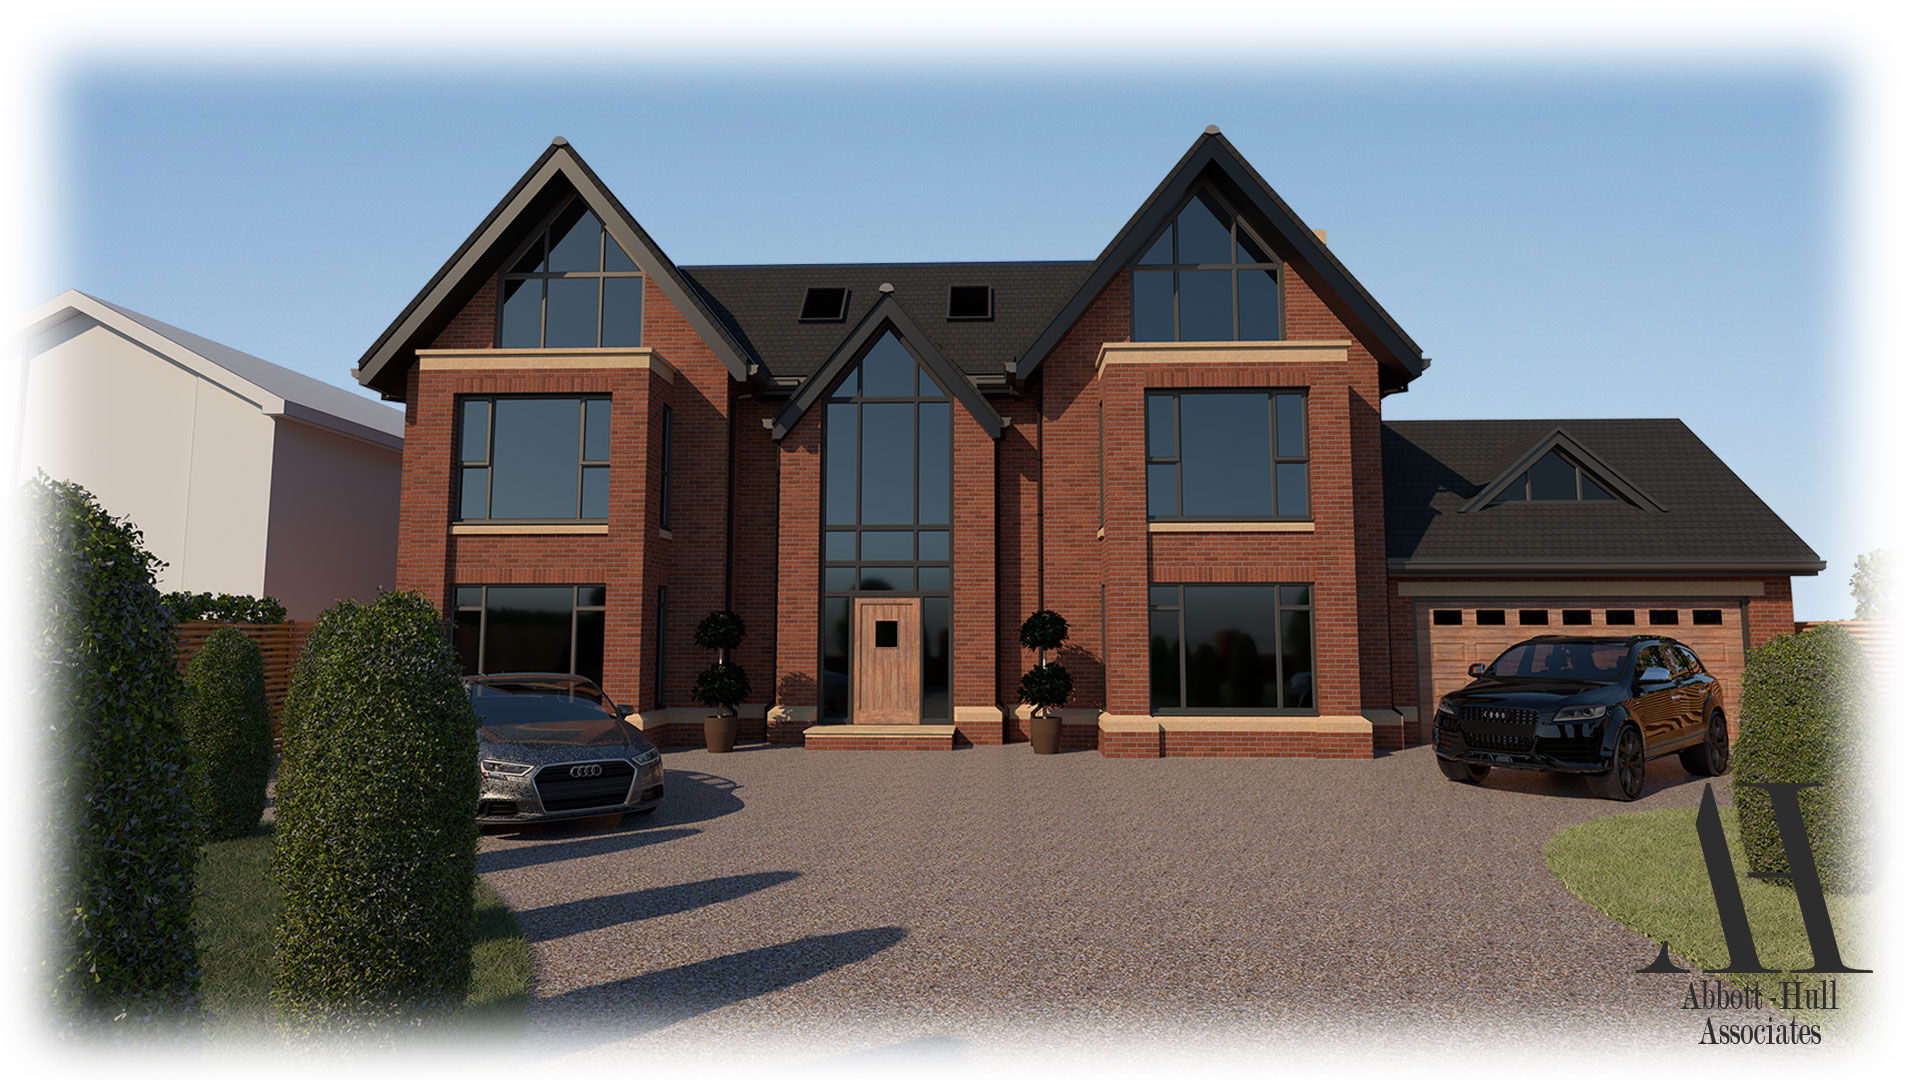 Oldfield Carr Lane, Poulton-le-Fylde, New Dwelling - Visual A